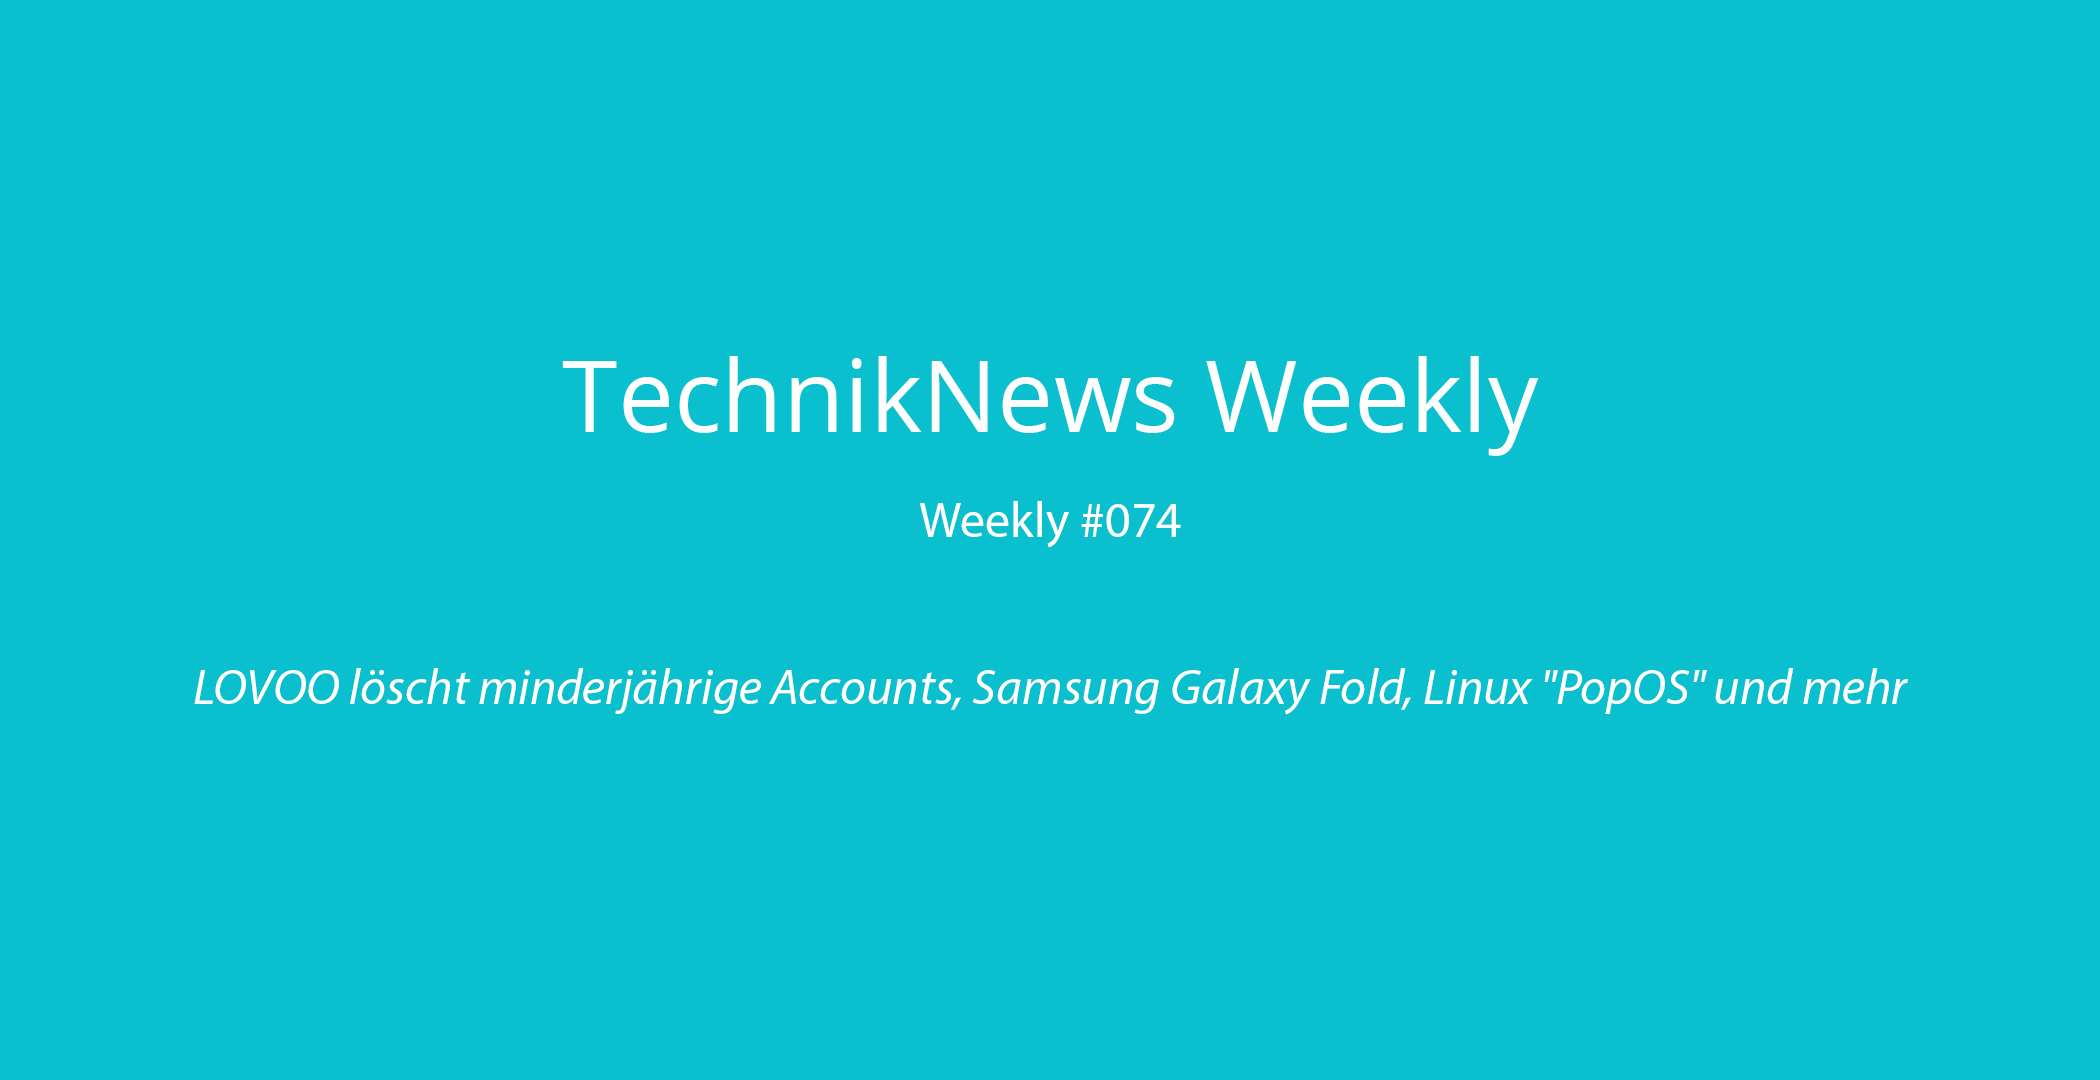 TechnikNews Weekly #074